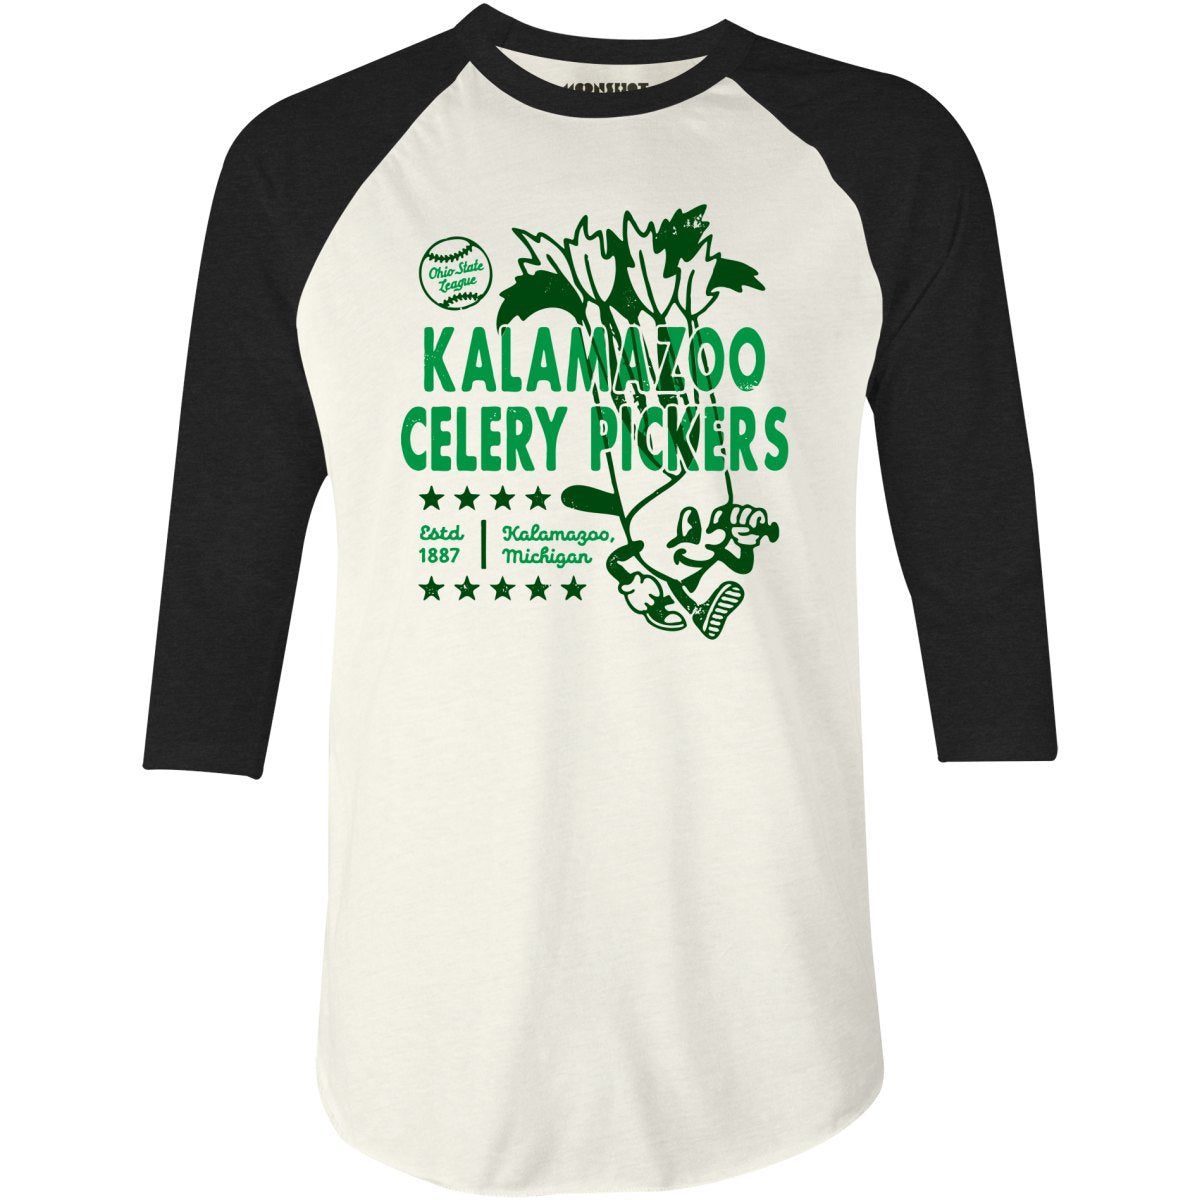 Kalamazoo Celery Pickers - Michigan - Vintage Defunct Baseball Teams - 3/4 Sleeve Raglan T-Shirt